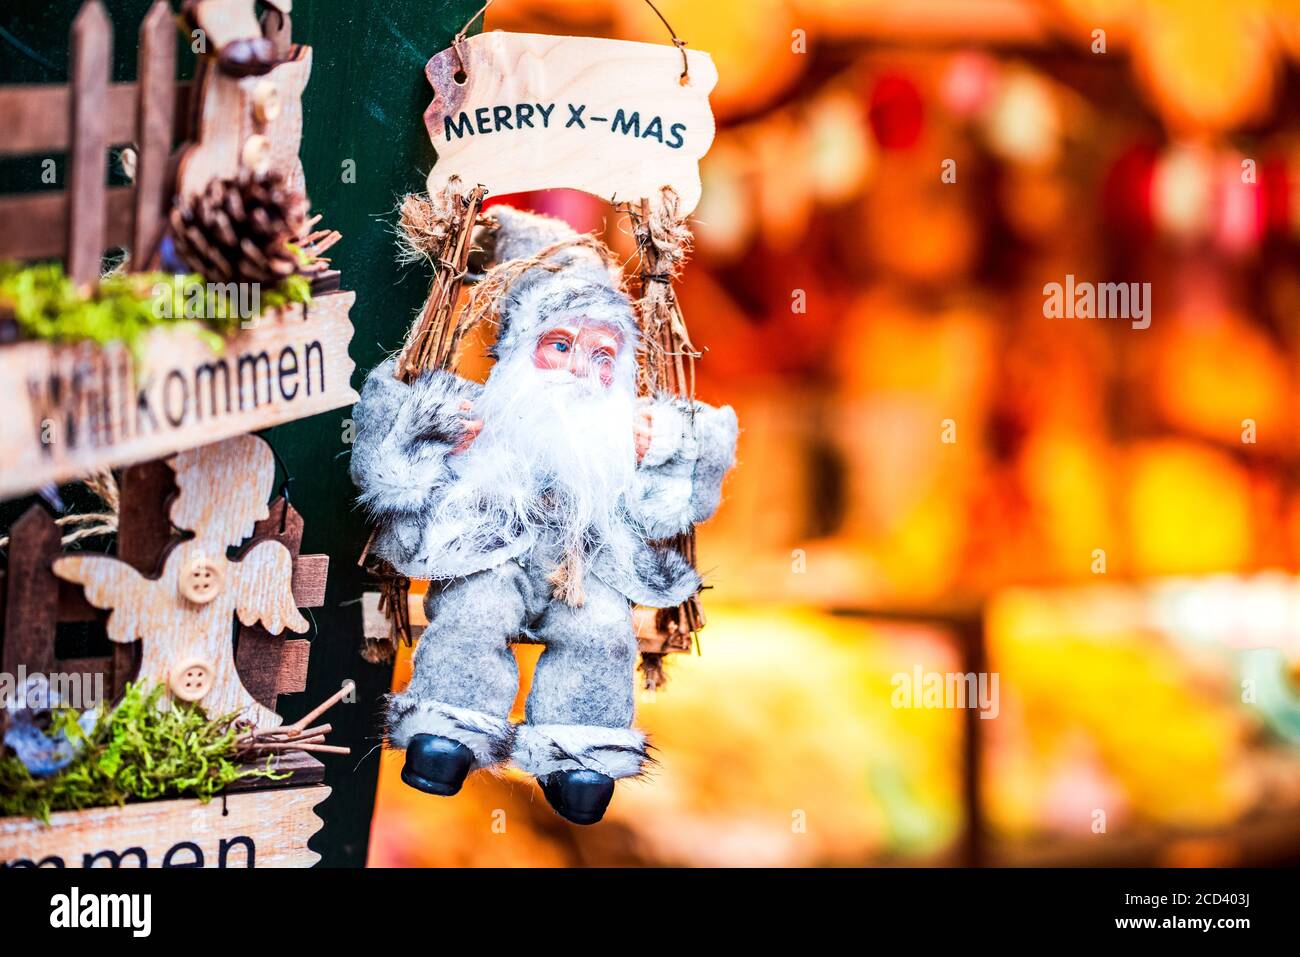 Salisburgo, Austria. Decorazioni natalizie alla fiera Christkindlmarkt X-mas, Salzburger Avent. Foto Stock